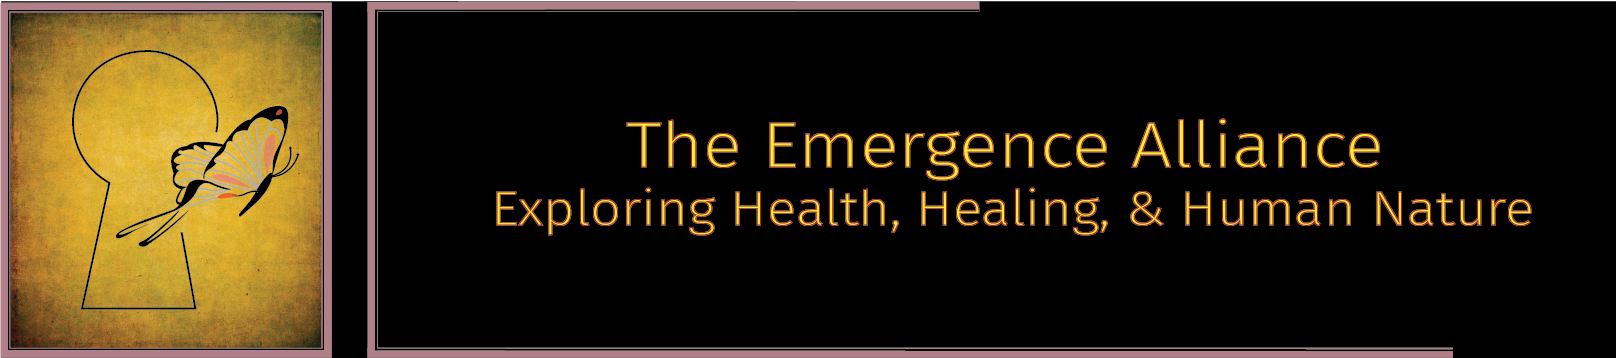 The Emergence Alliance Banner